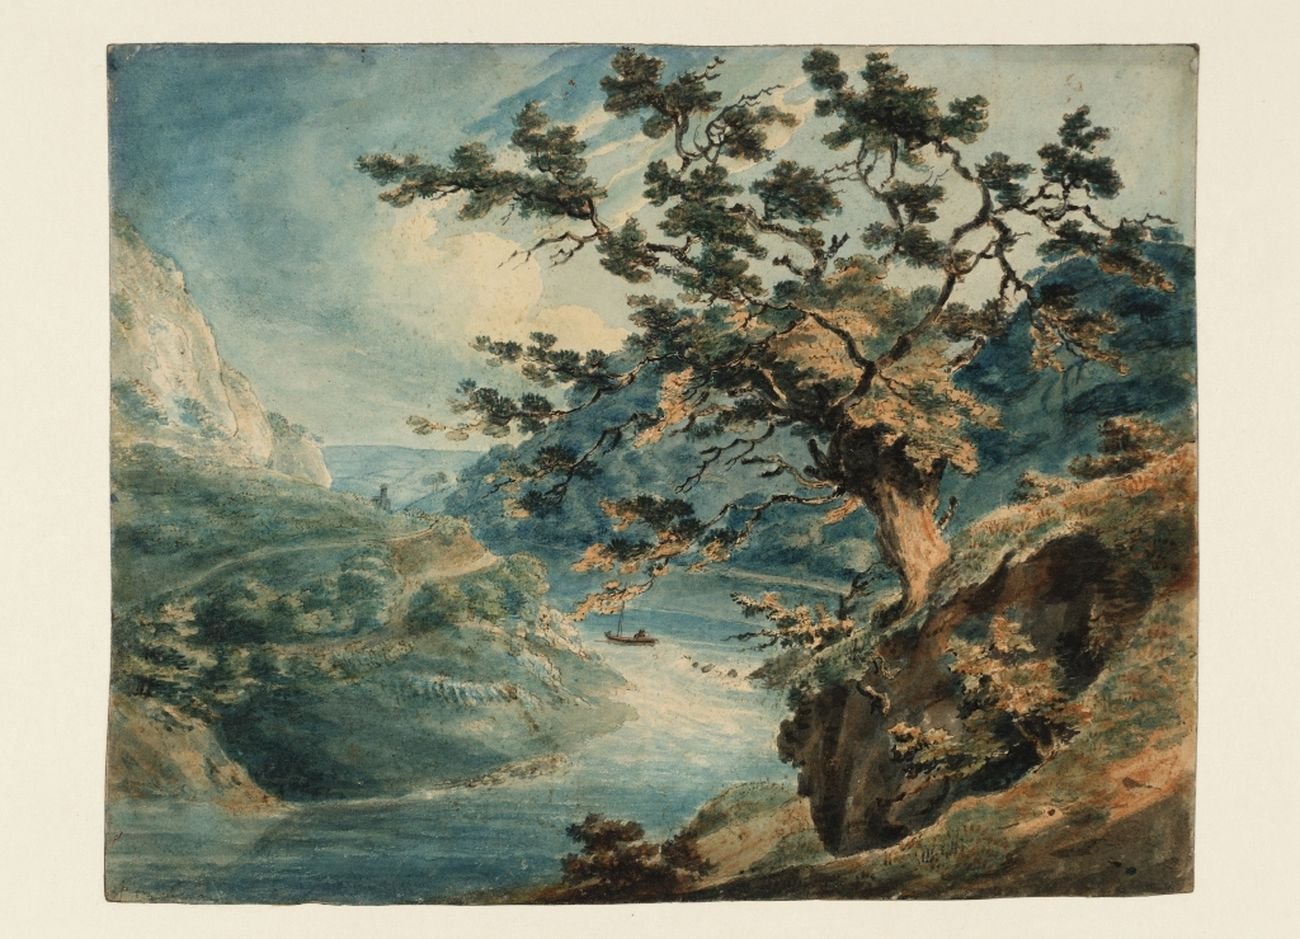 Joseph Mallord William Turner, View in the Avon Gorge, 1791. Tate